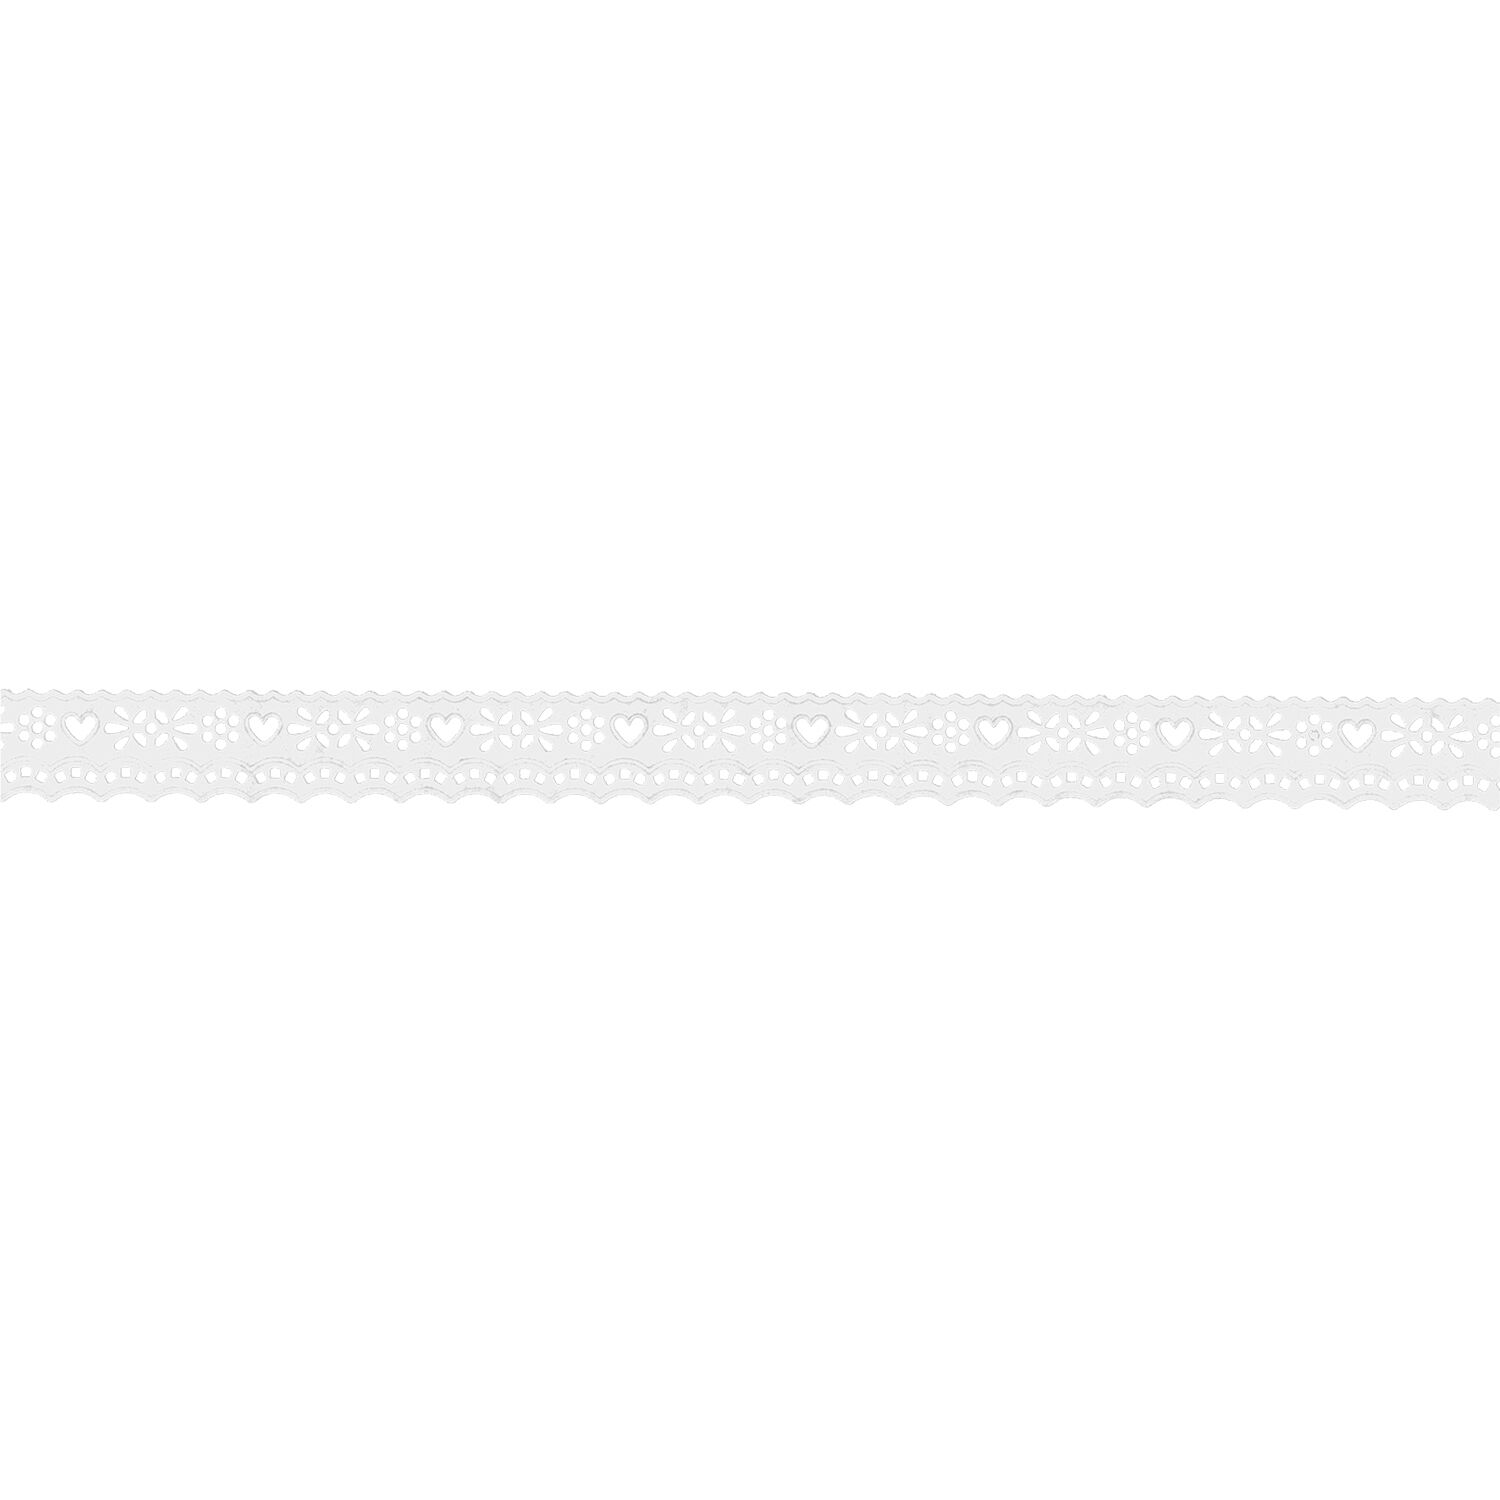 NEU Papierspitze selbstklebend, 2 m x 17 mm, Wellenmotiv Weiß Bild 2